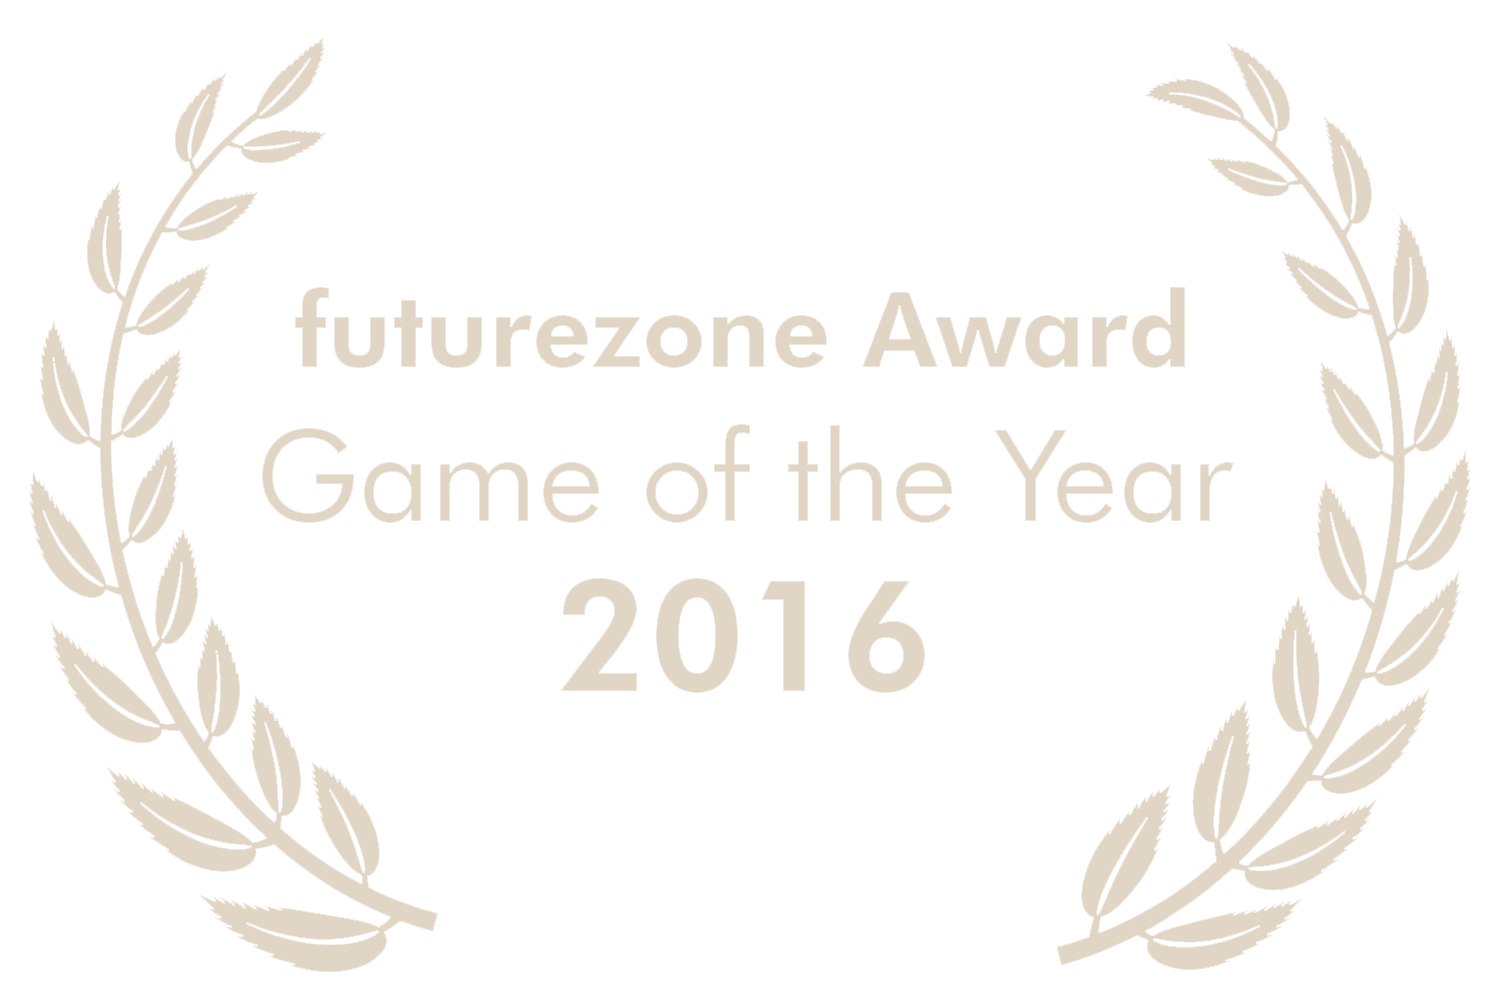 Futurezone Game of the Year Award